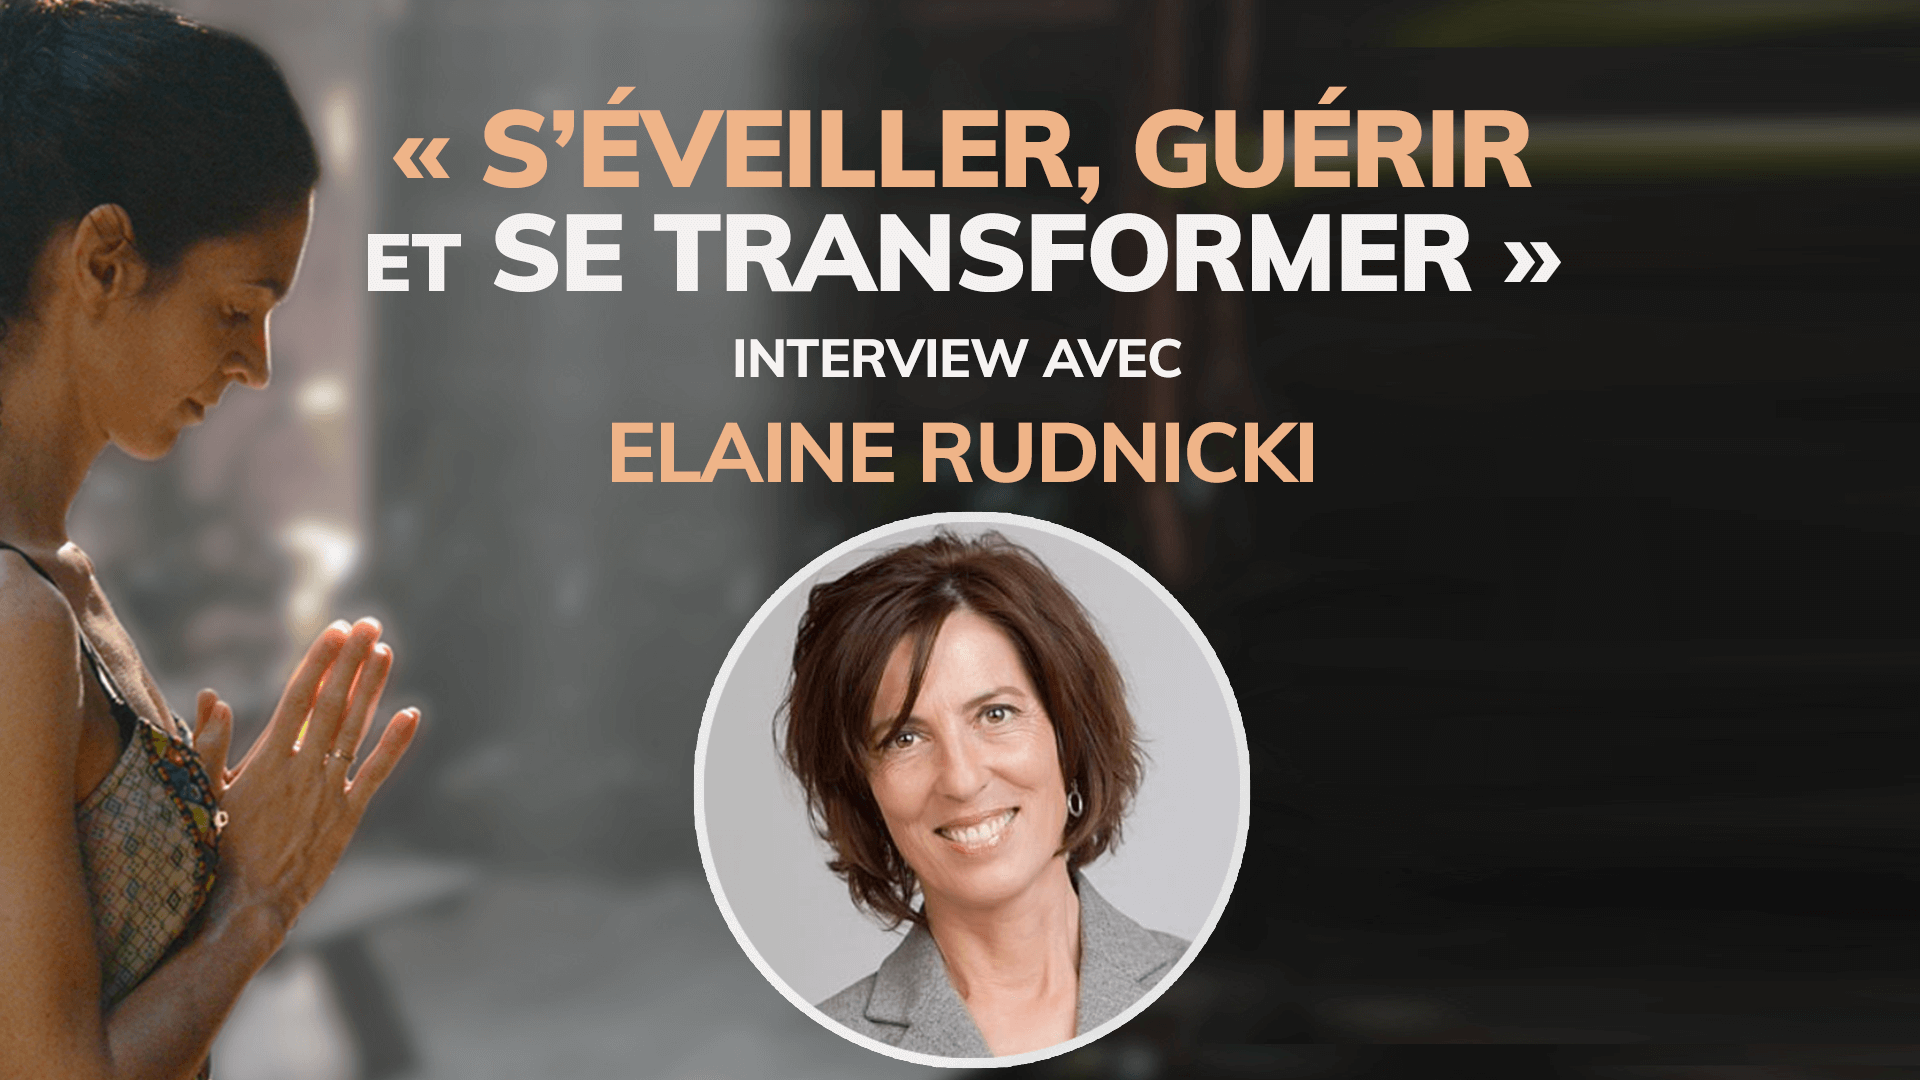 Interview avec Elaine Rudnicki sur Happyculture.tv